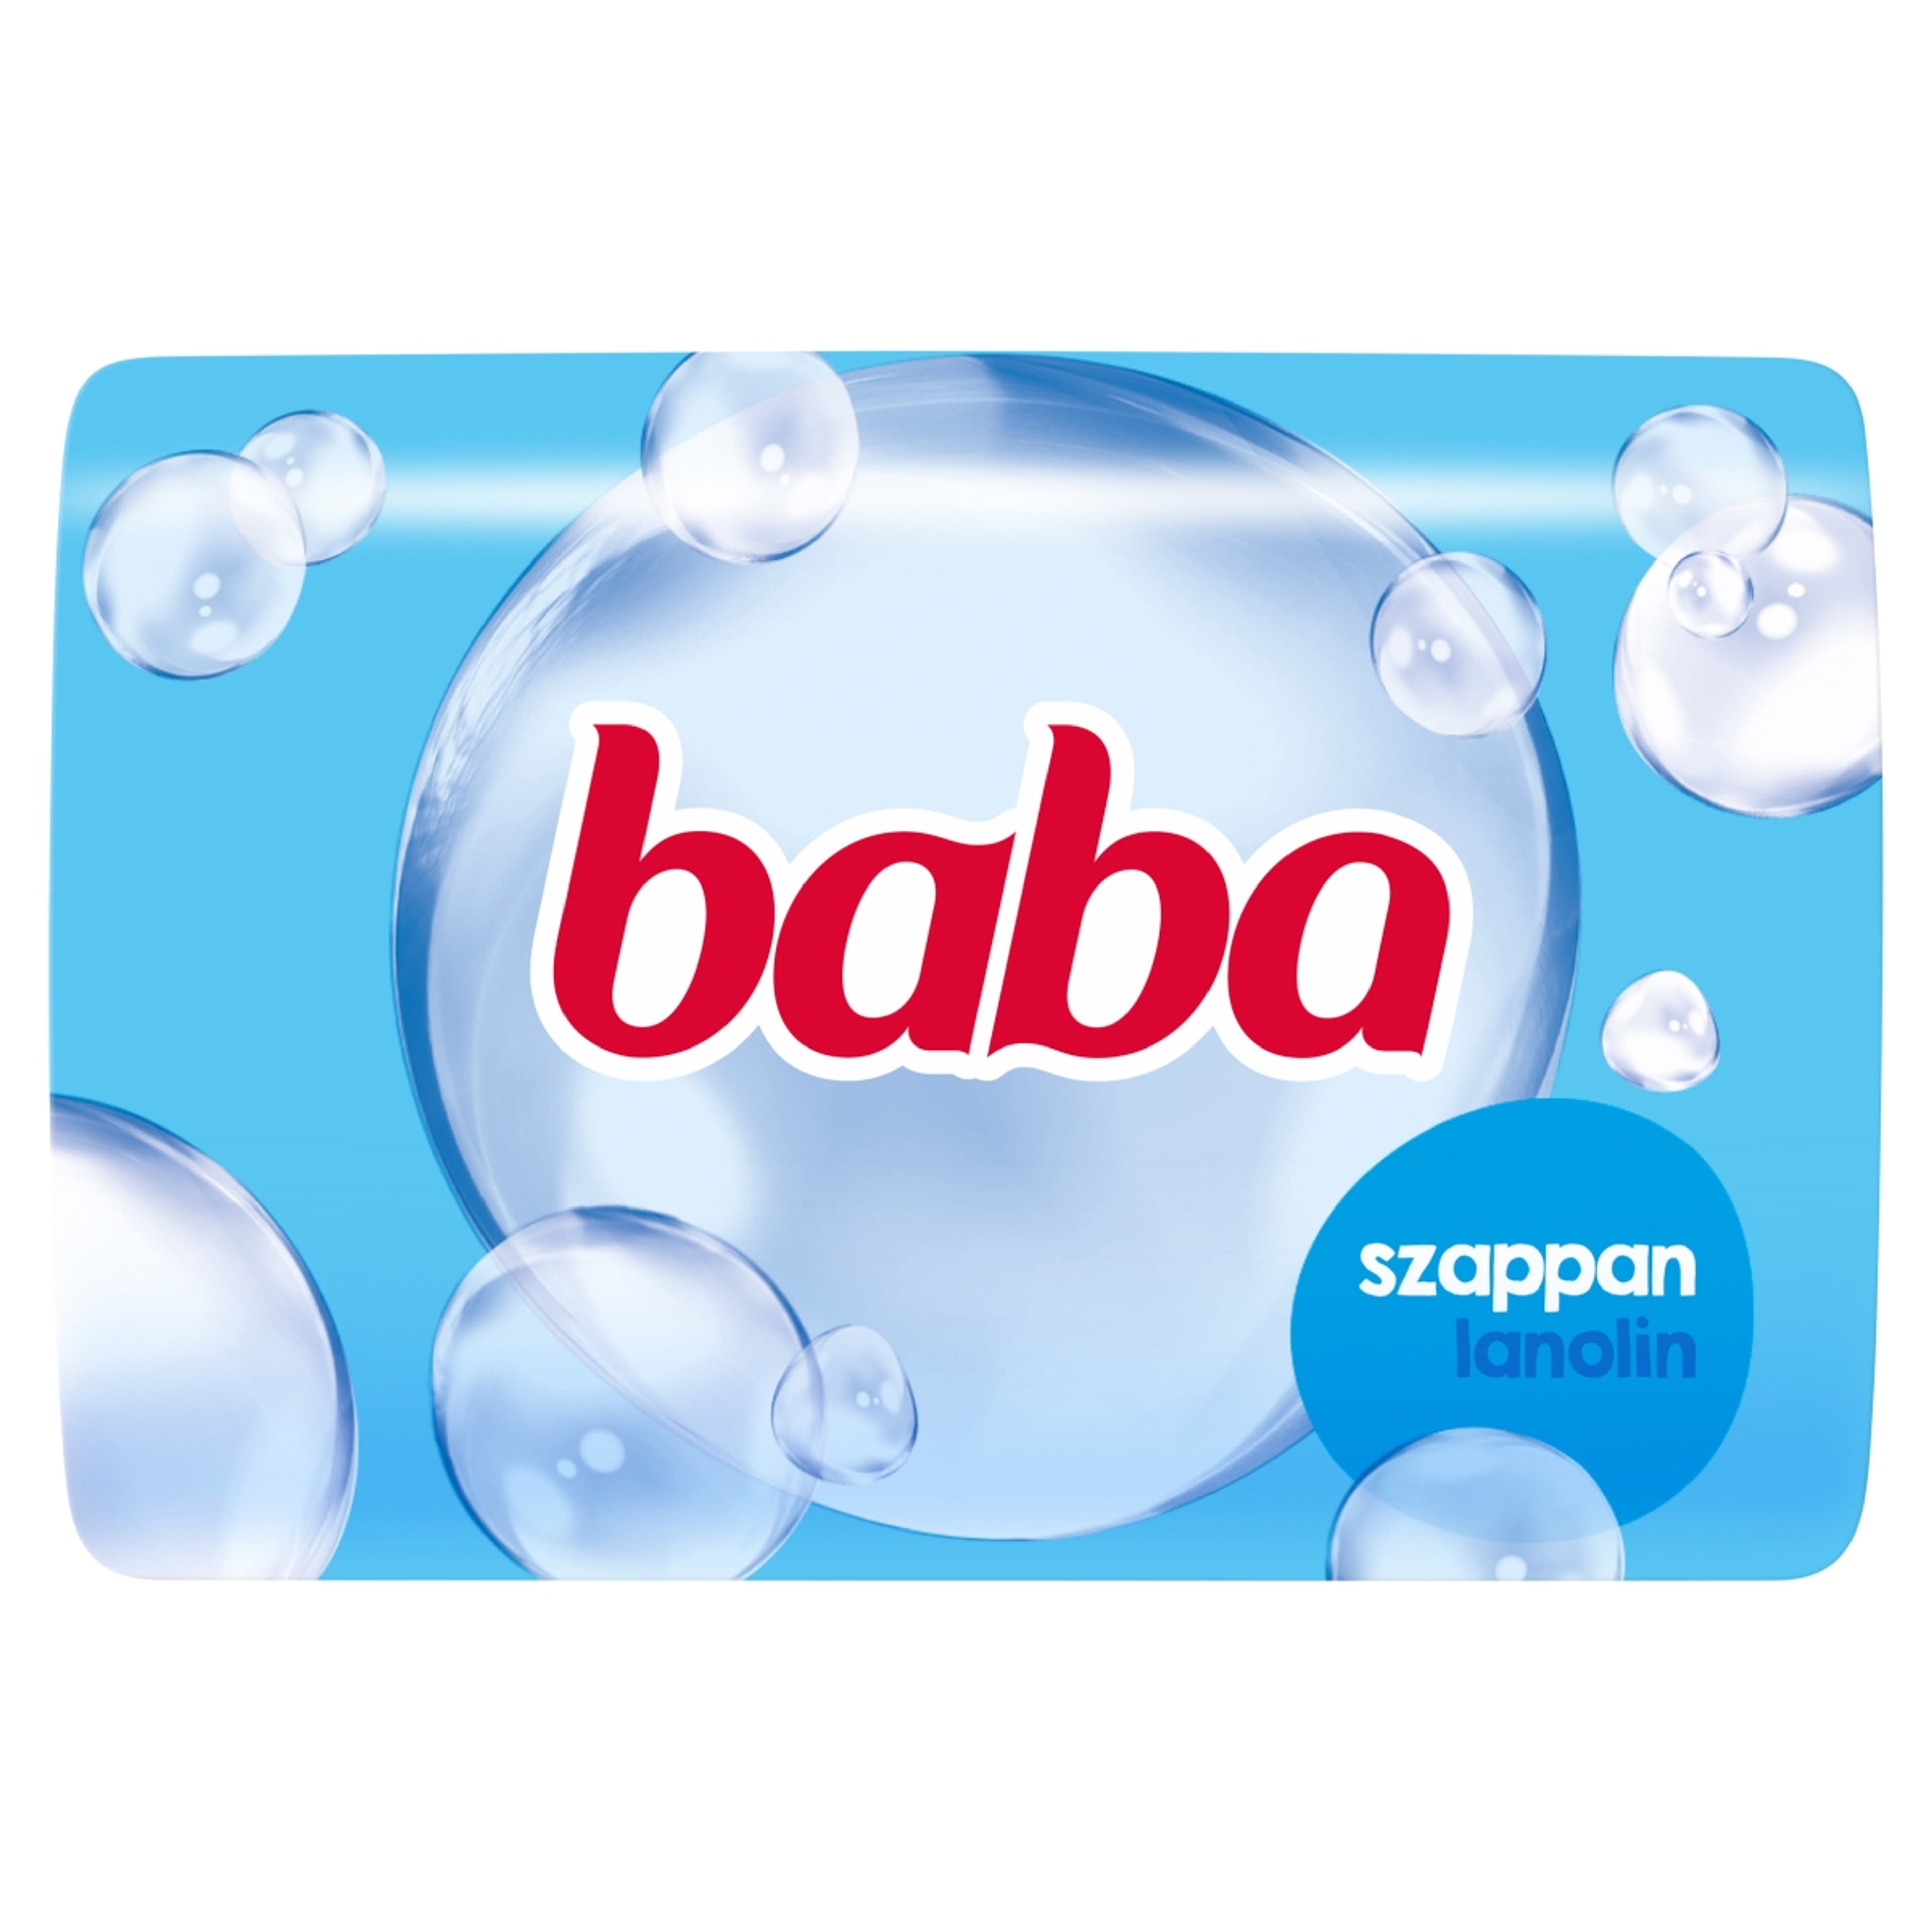 Baba lanolin szappan - 90 g